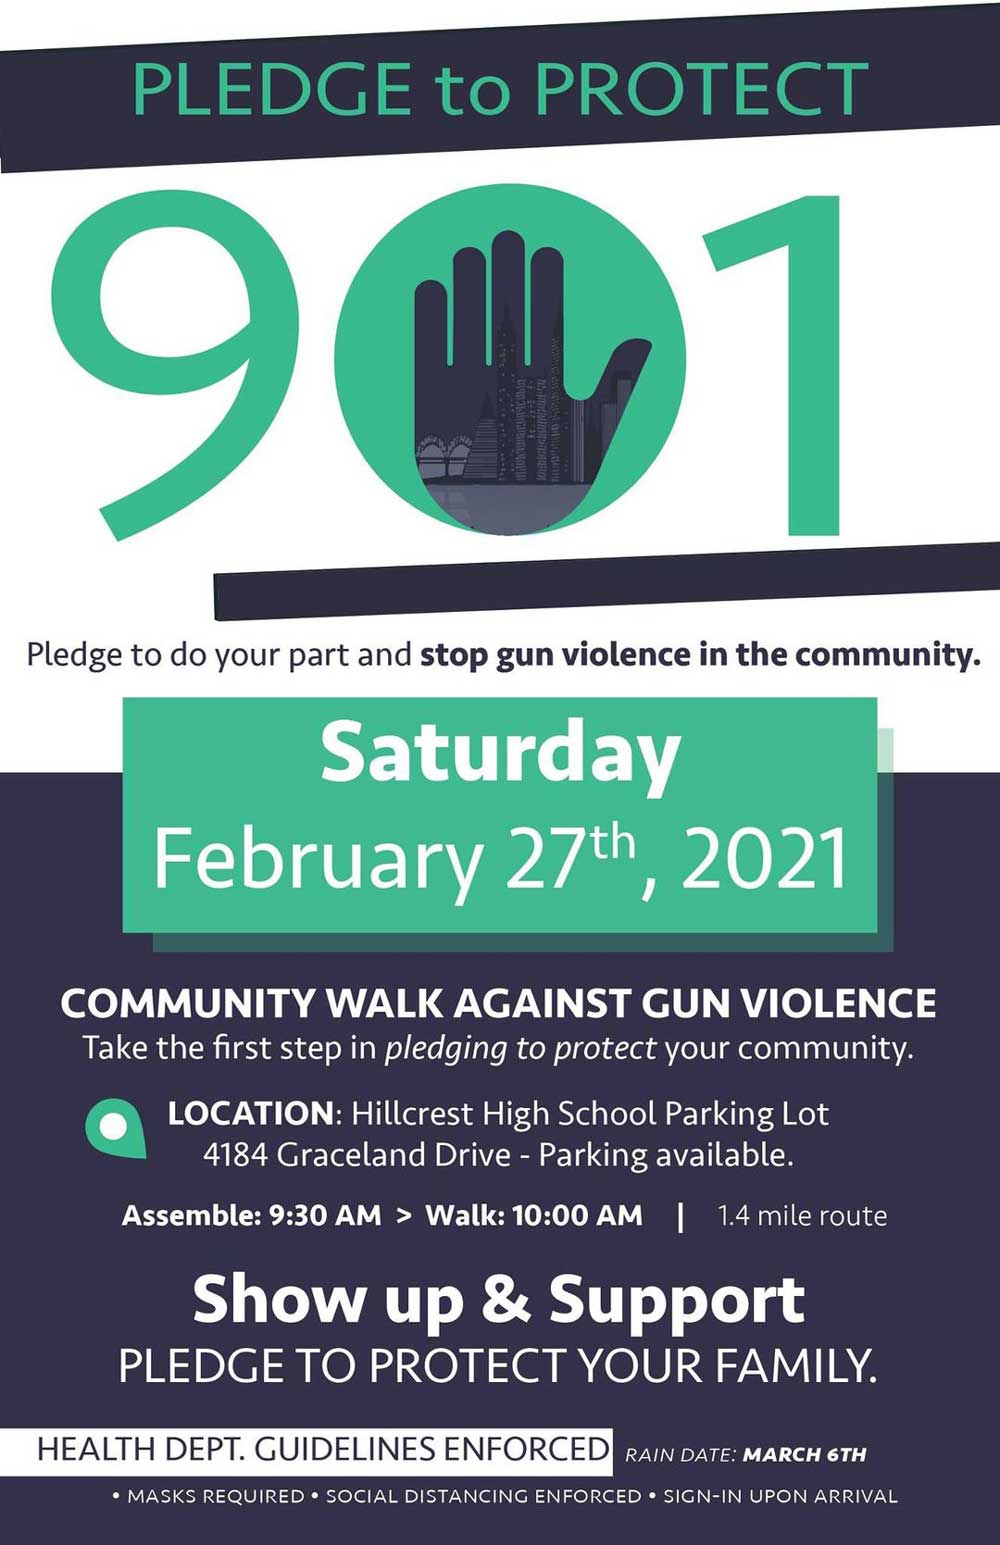 Pledge To Protect Community Walk Against Gun Violence - Saturday, February 27, 2021